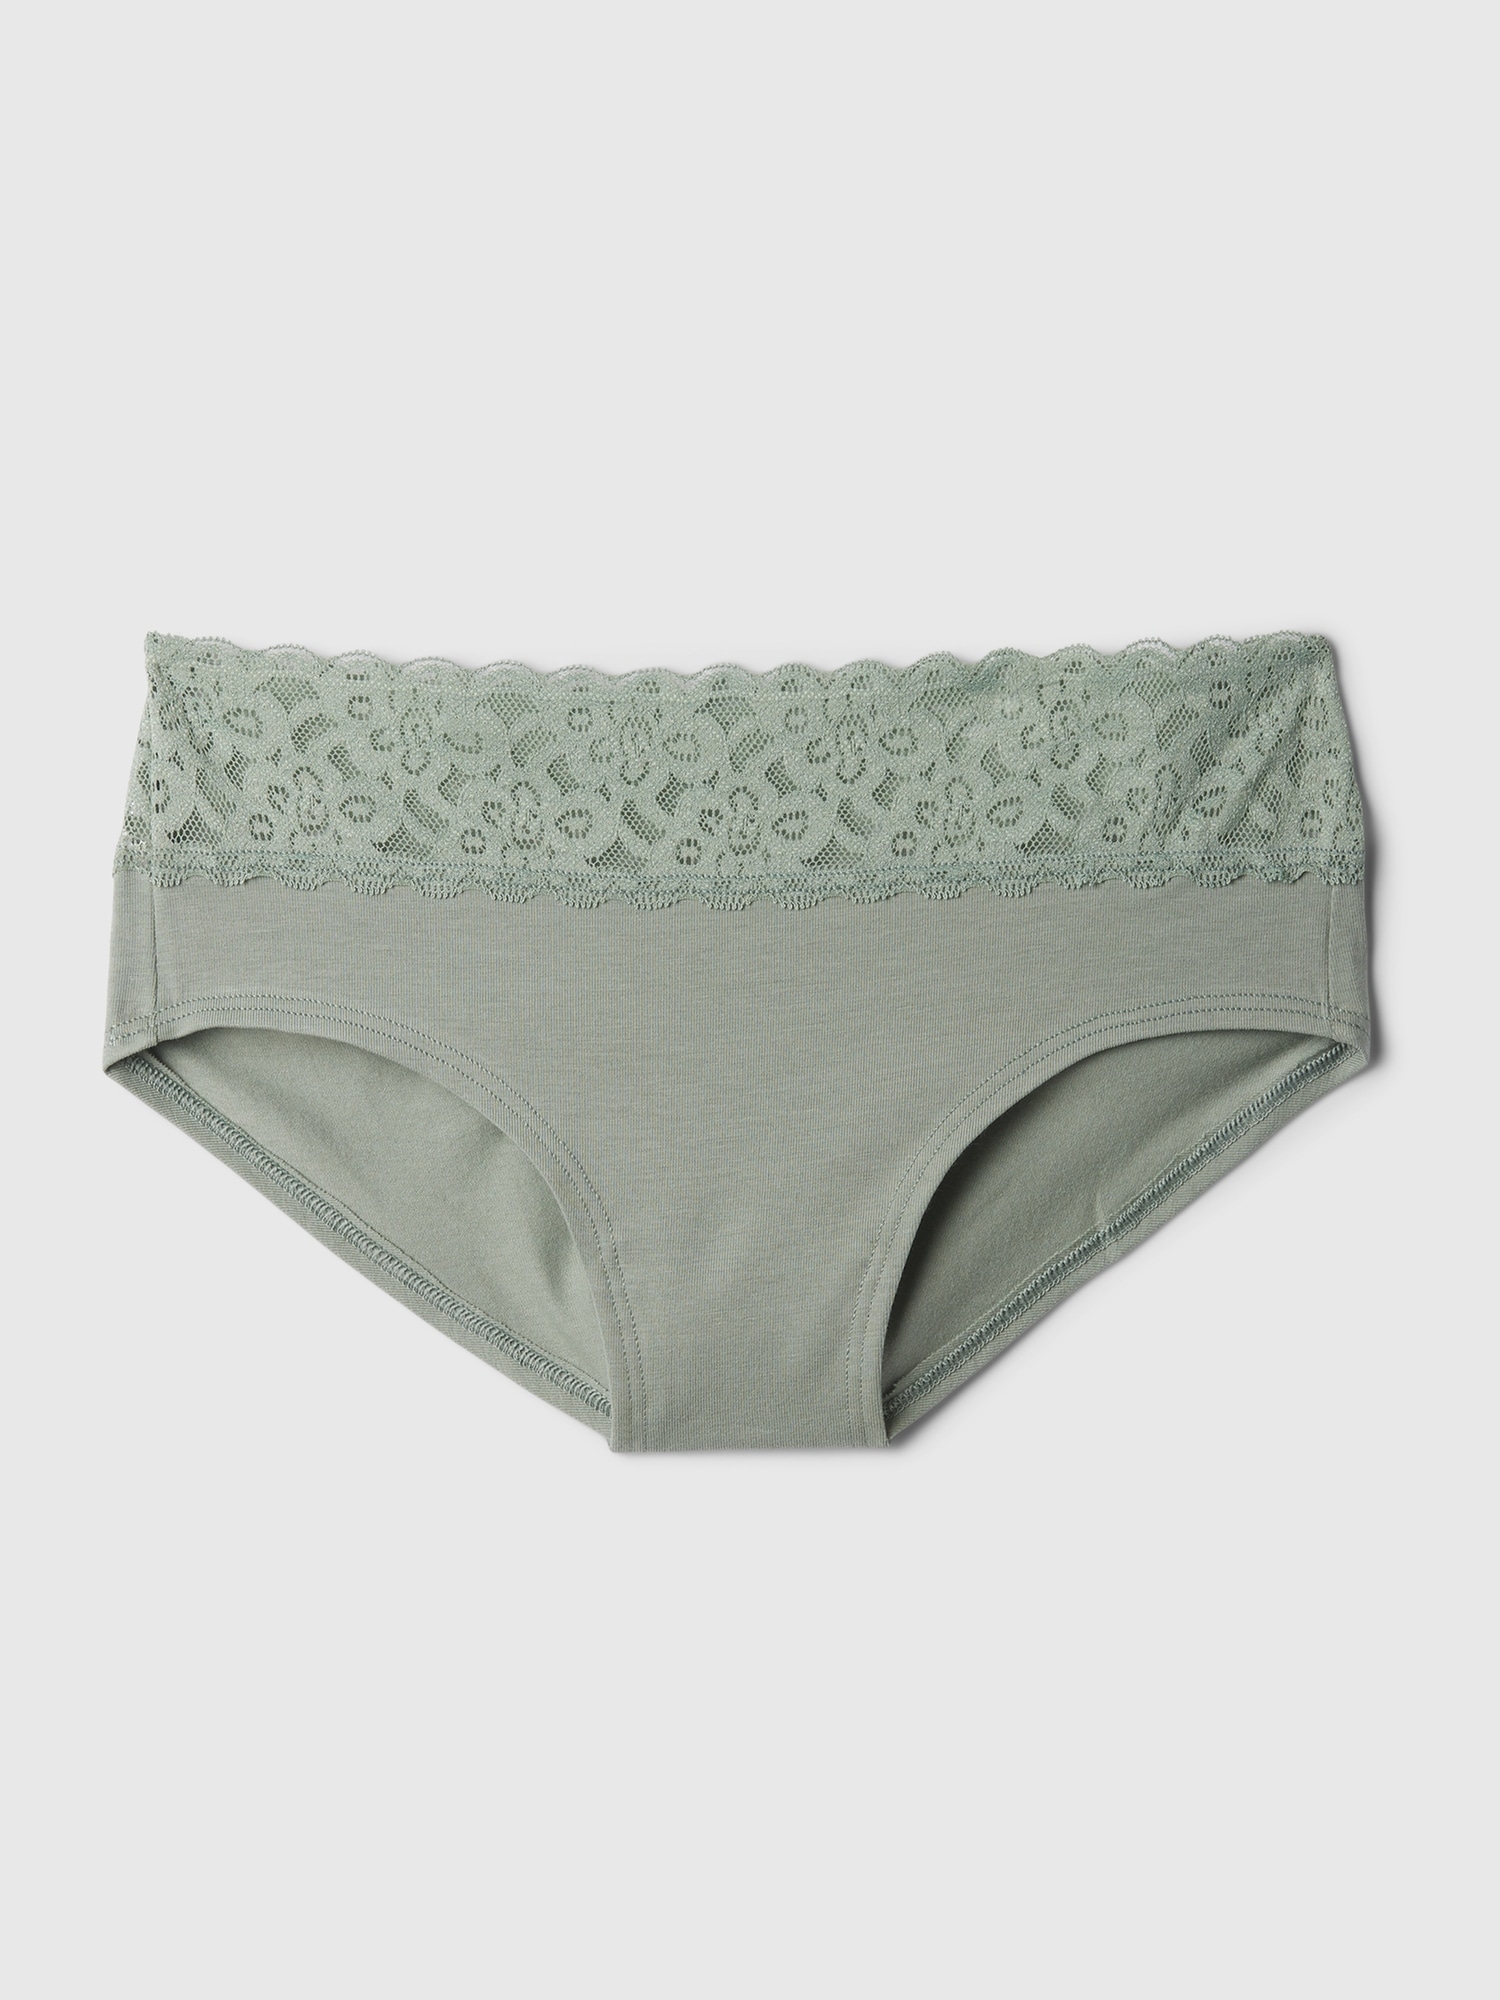 Gap Lace Bikini Undies Stretch Cotton Women's Underwear Panties 1 Pcs NWT